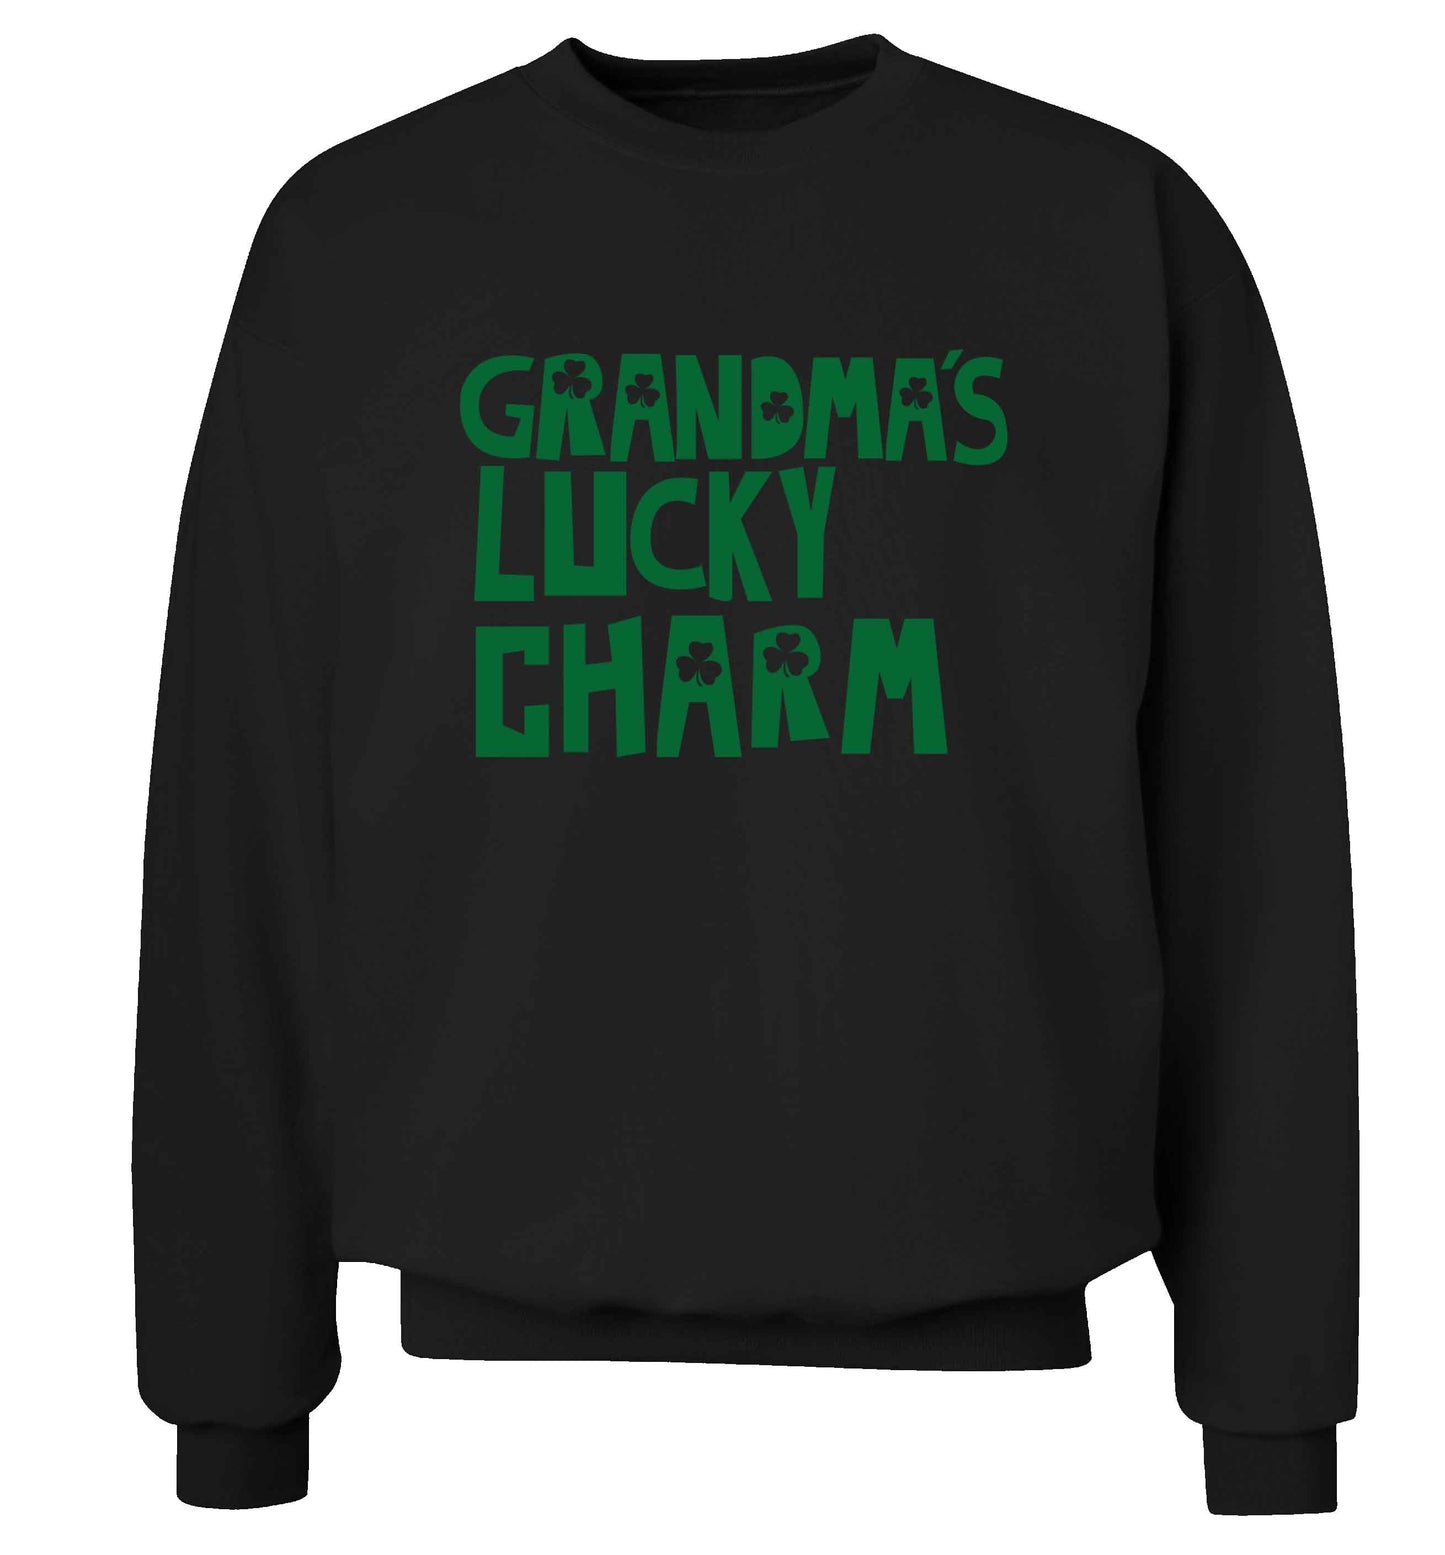 Grandma's lucky charm adult's unisex black sweater 2XL